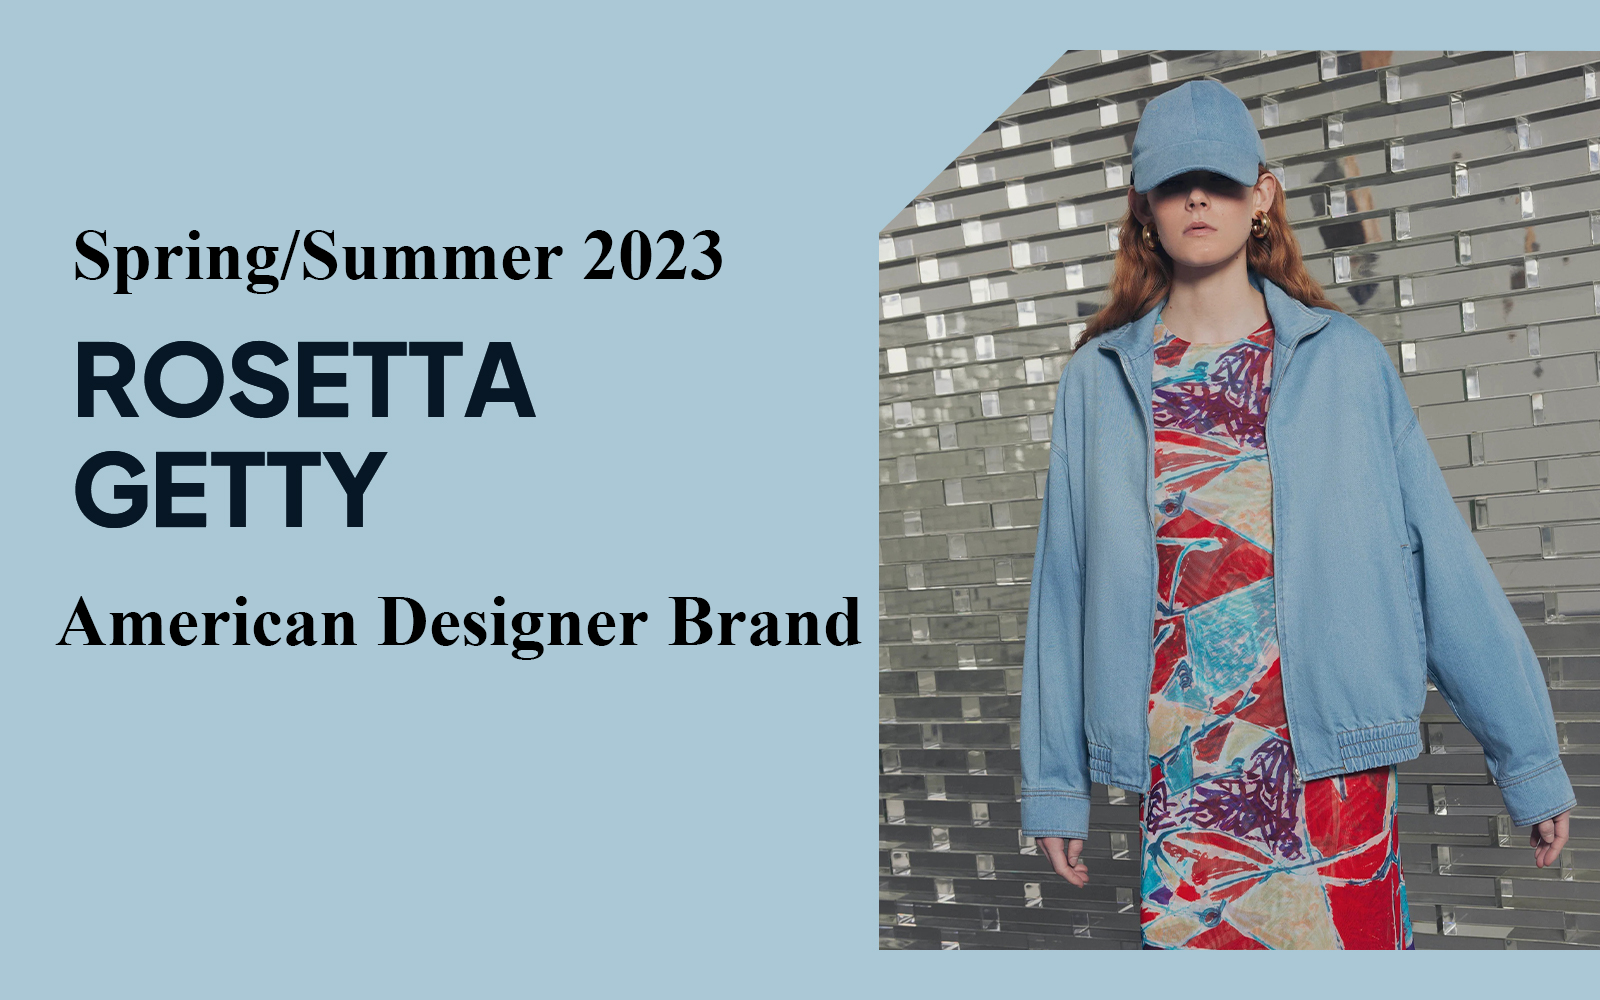 The Analysis of Rosetta Getty The Womenswear Designer Brand